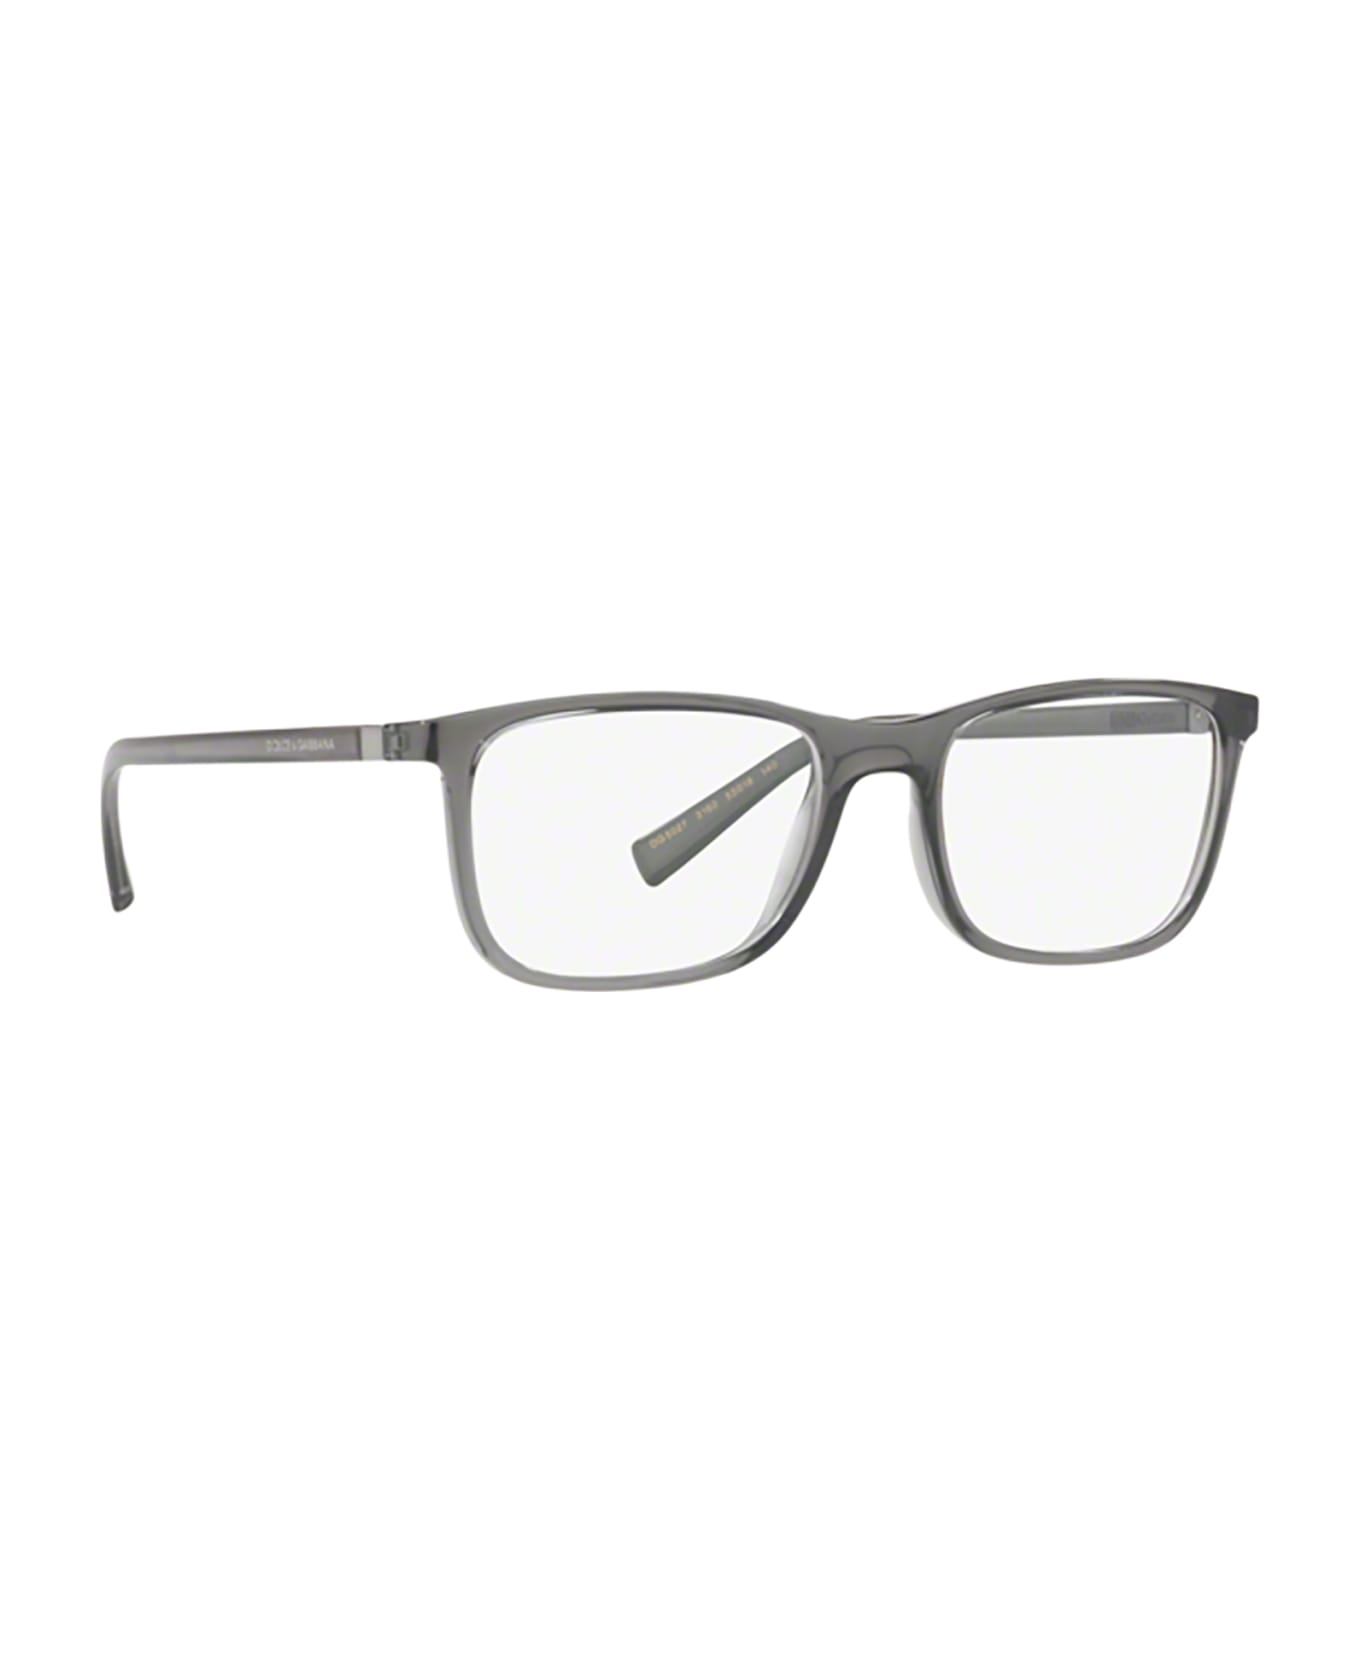 Dolce & Gabbana Eyewear Dg5027 Transparent Grey Glasses - TRANSPARENT GREY